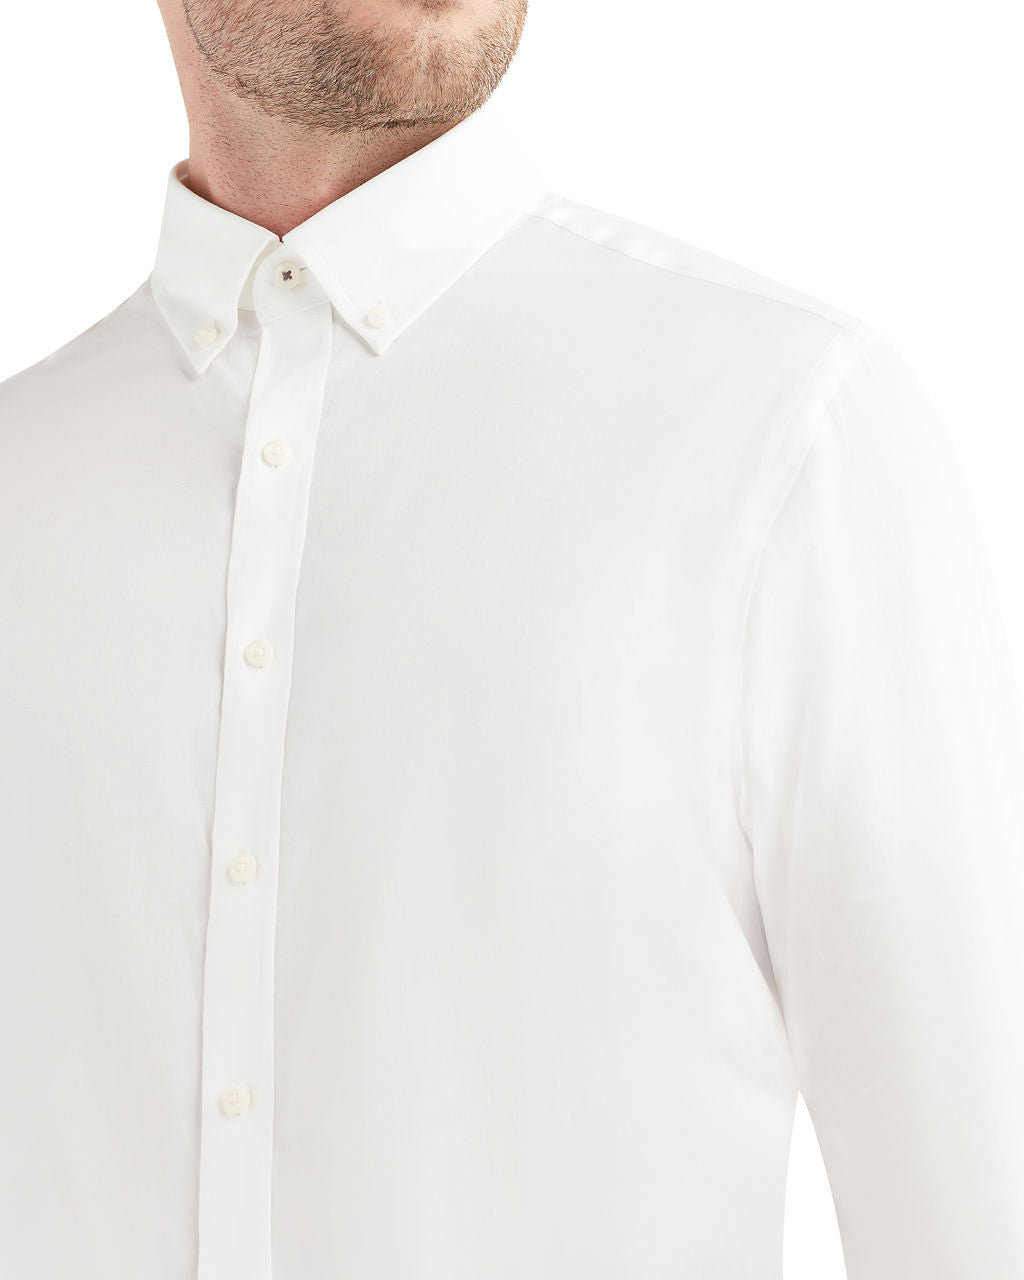 White Solid Oxford Slim Fit Dress Shirt – Ben Sherman